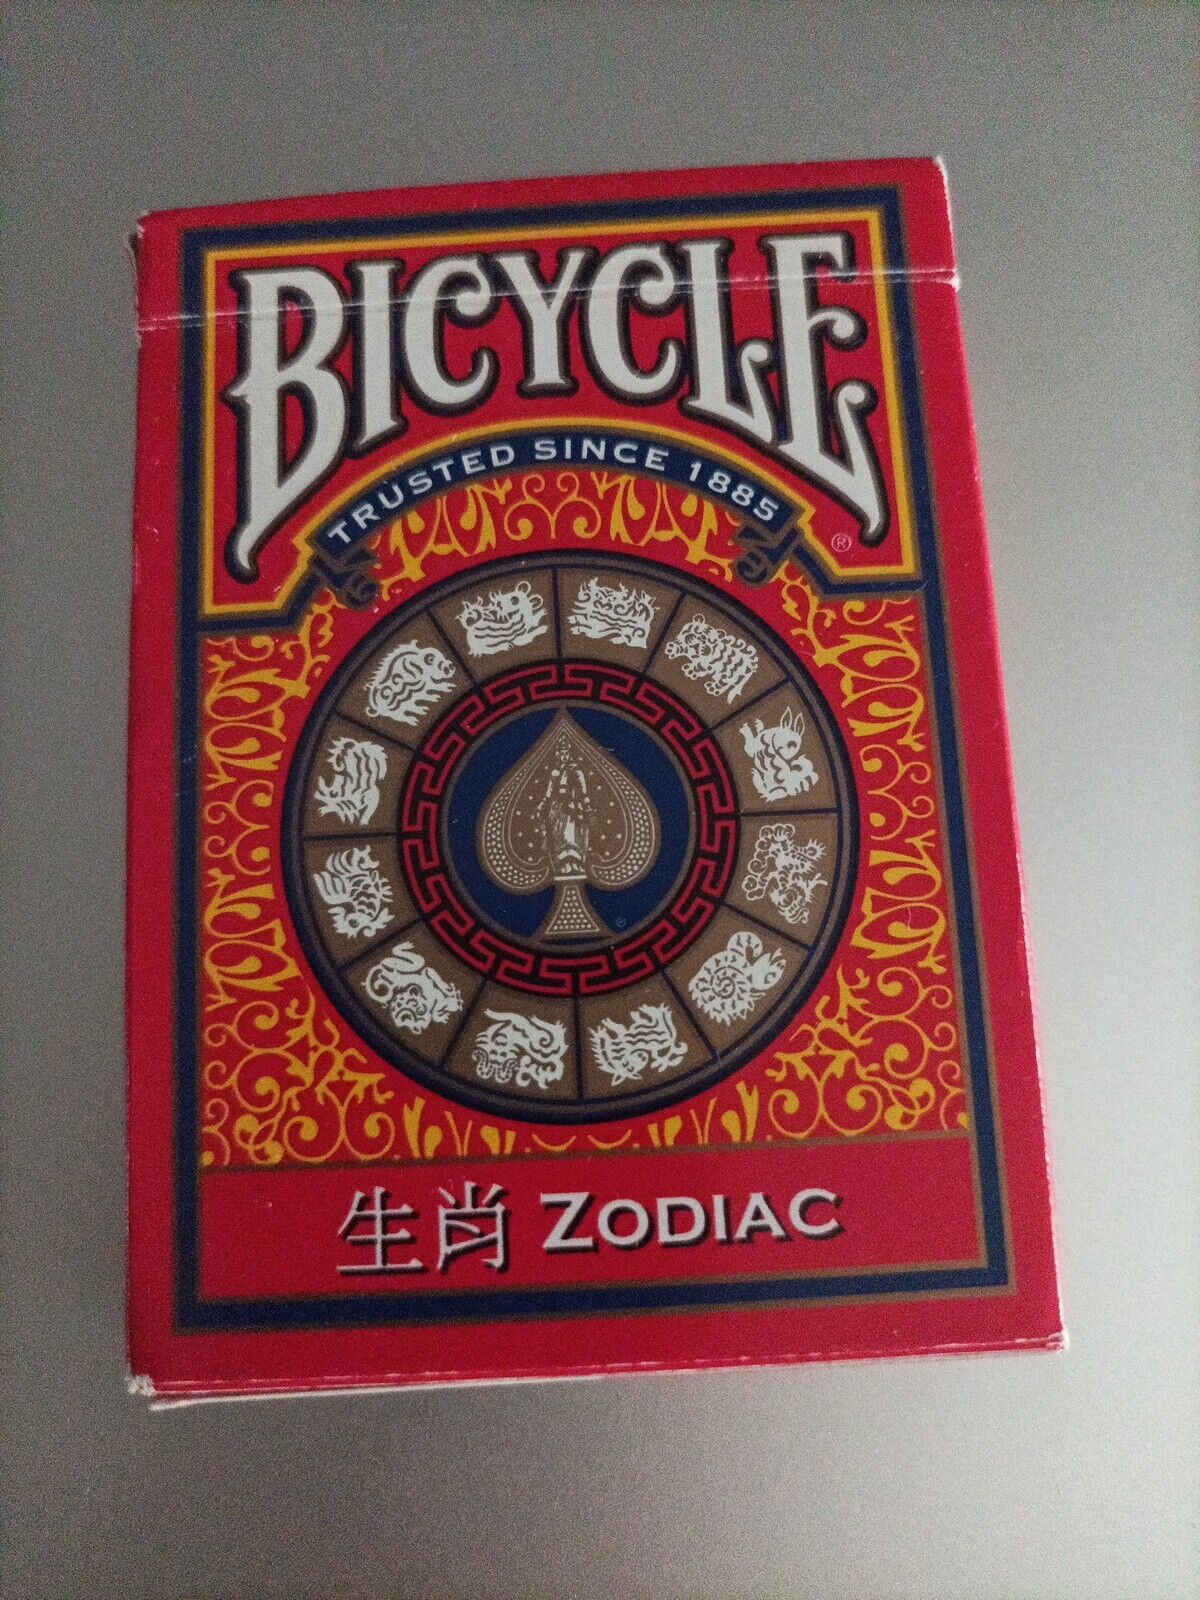 2011 Zodiac Bicycle Card Set, USA